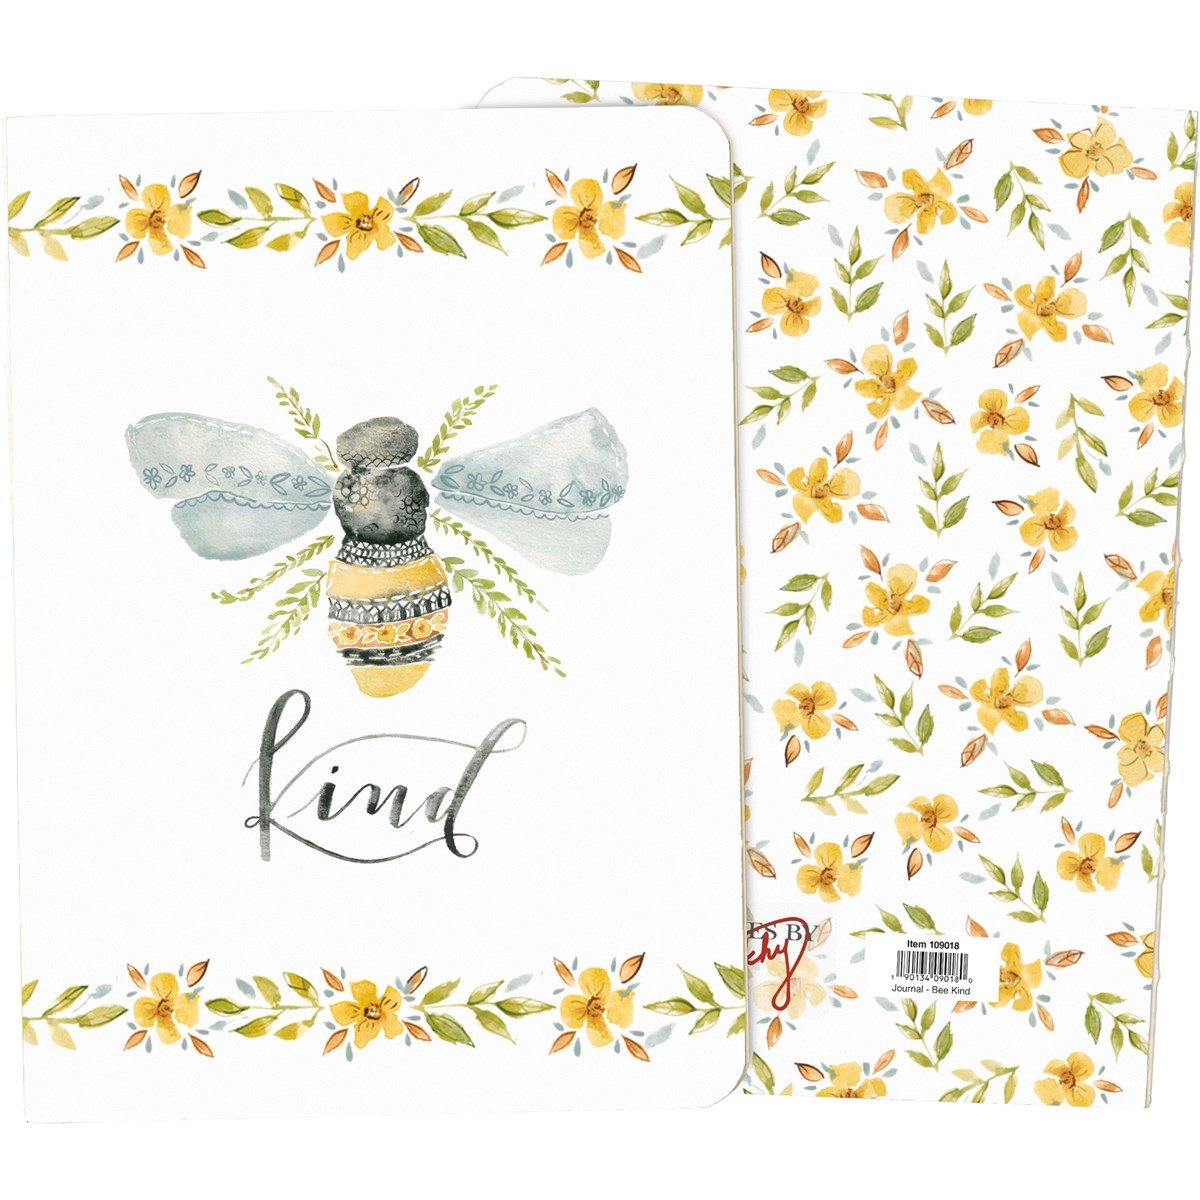 Bee Kind Journal